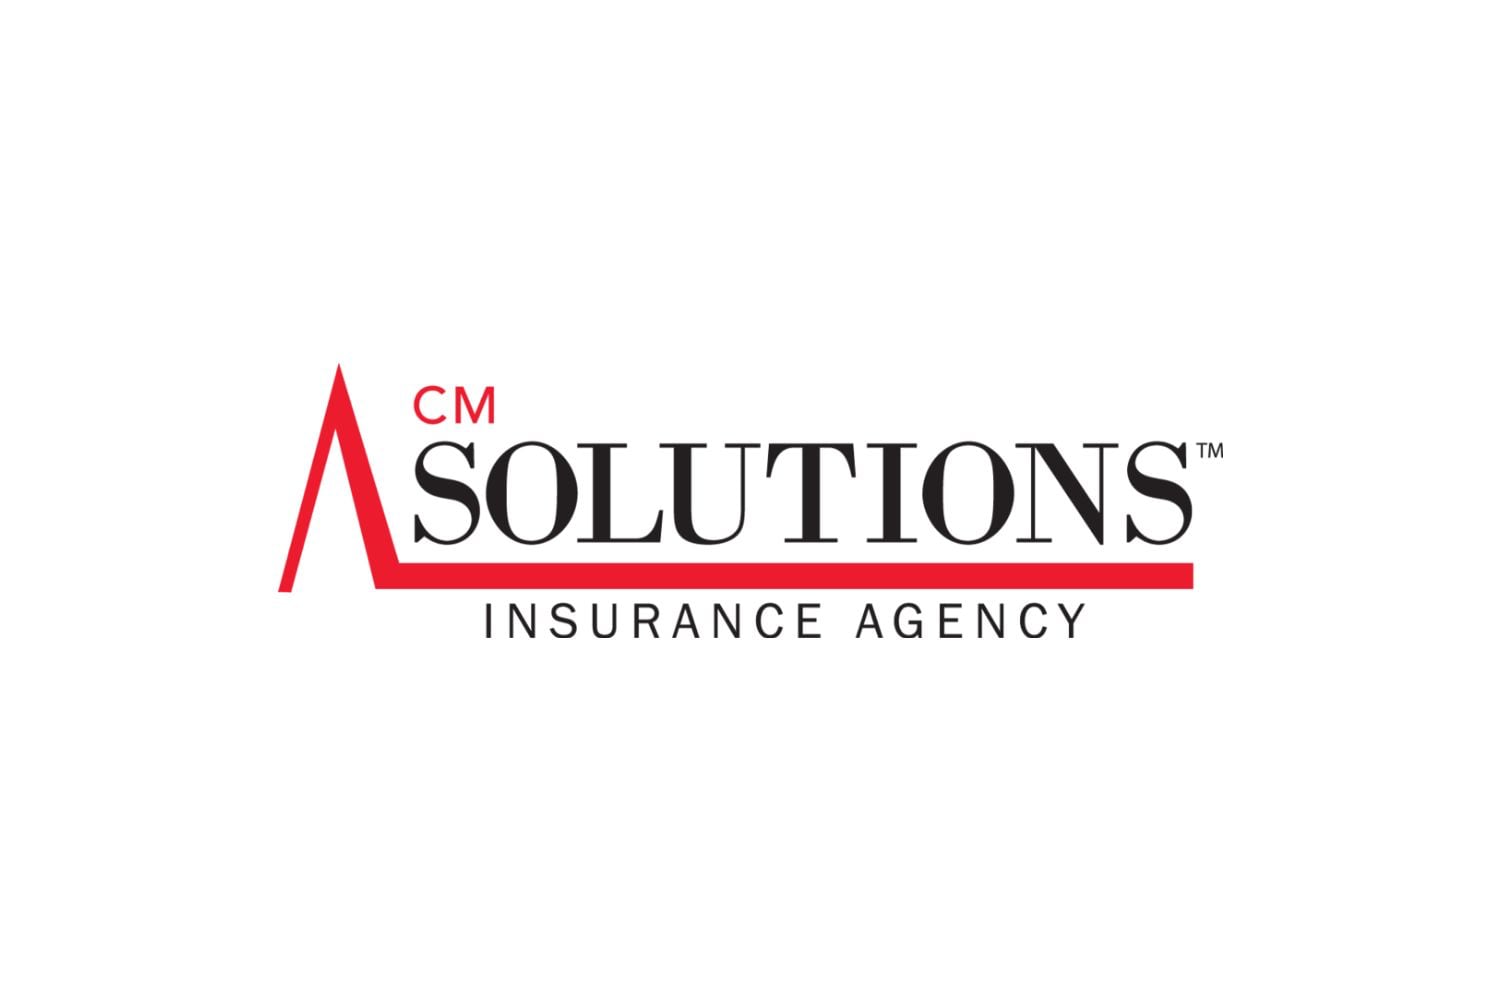 CM Solutions™ Insurance Agency